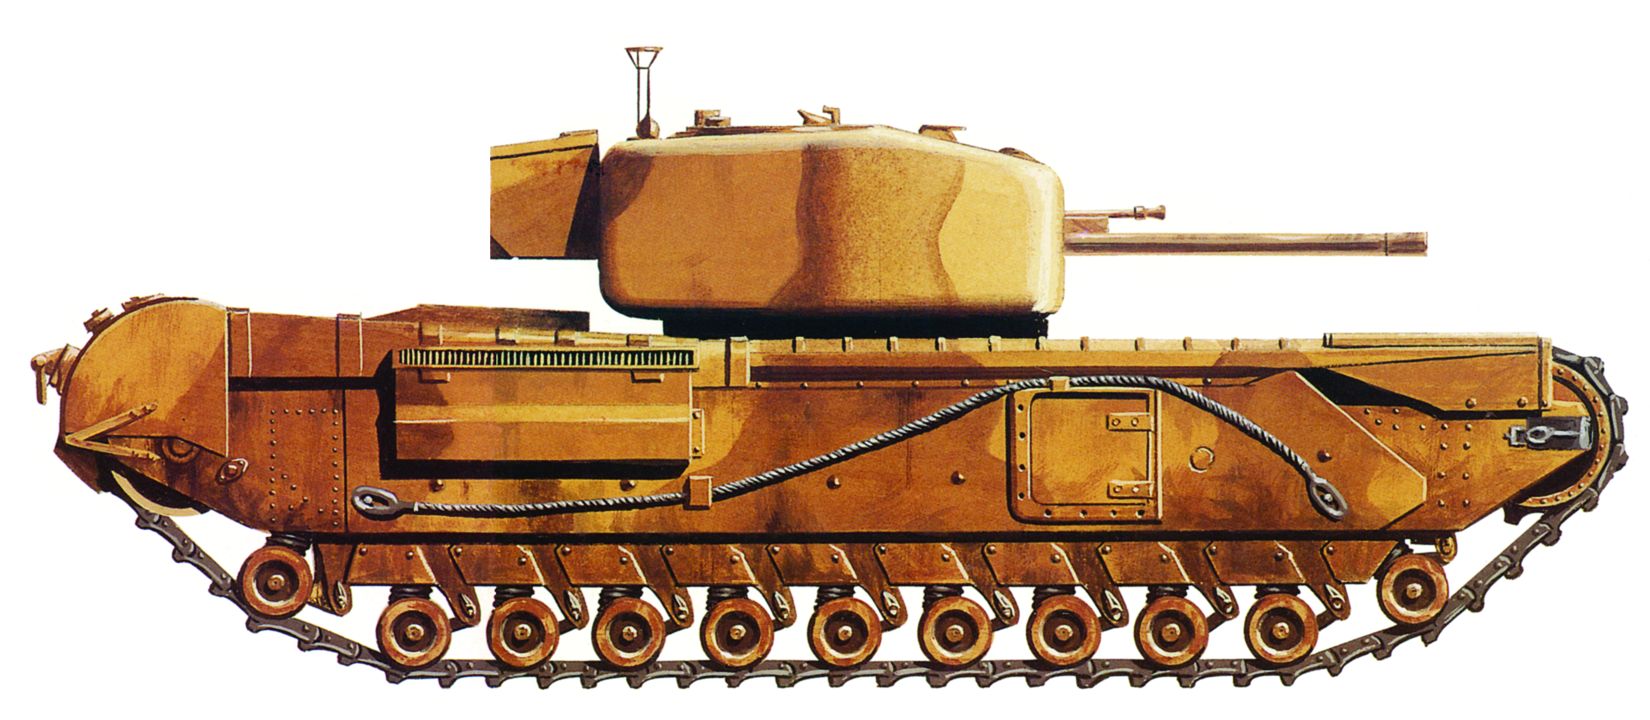 Ordnance: The British Churchill Tank - Warfare History Network